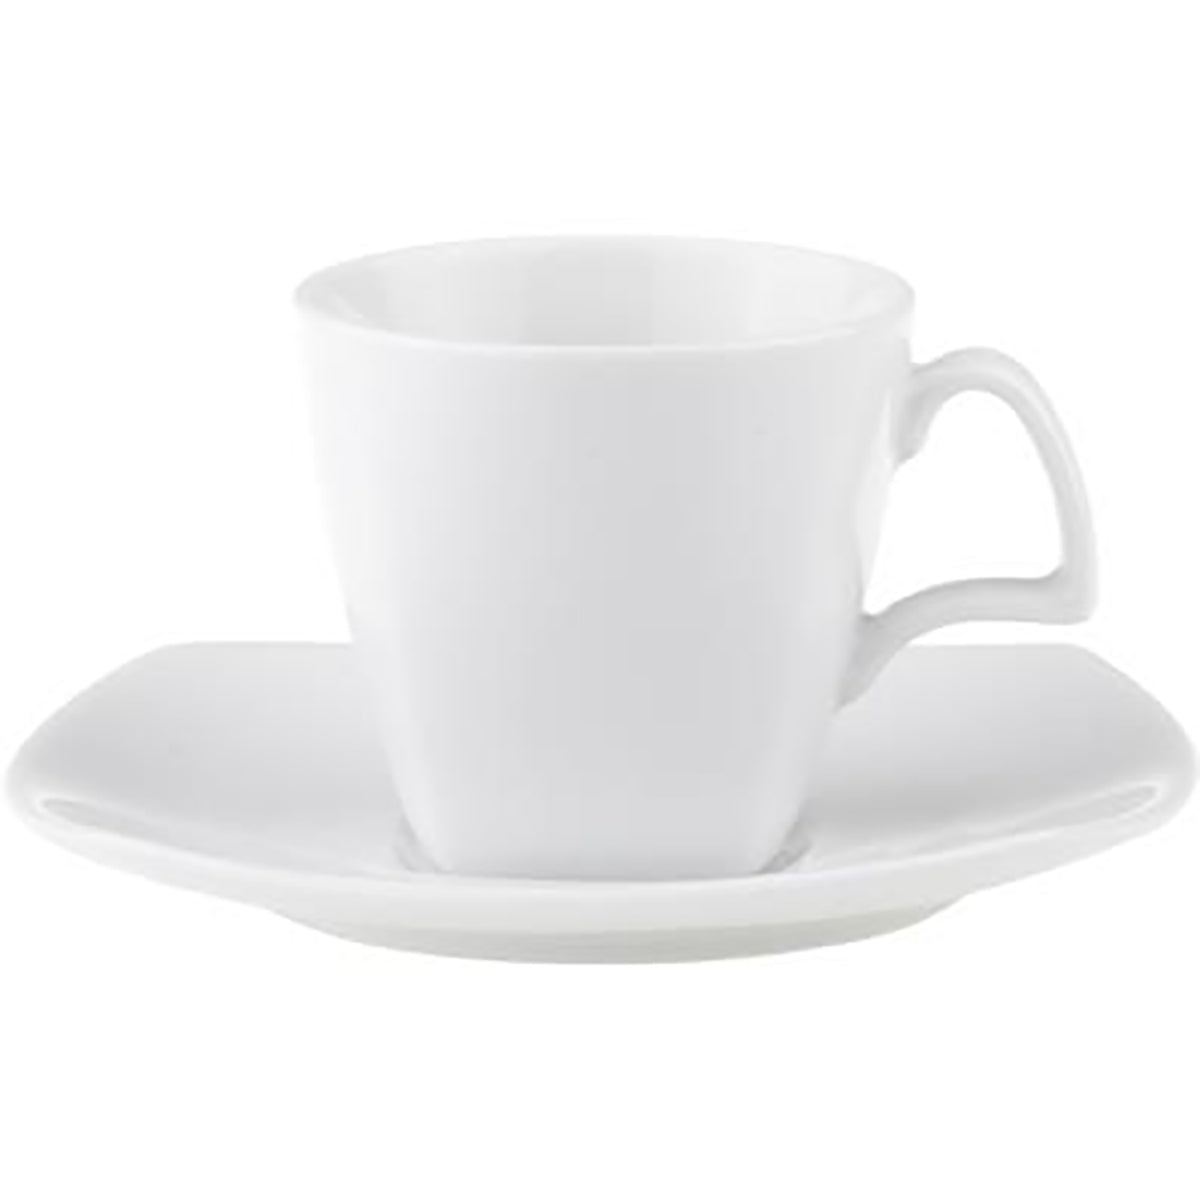 94480 Royal Porcelain Chelsea Espresso Cup 0.1Lt (94481/86Tri) (4111) Tomkin Australia Hospitality Supplies